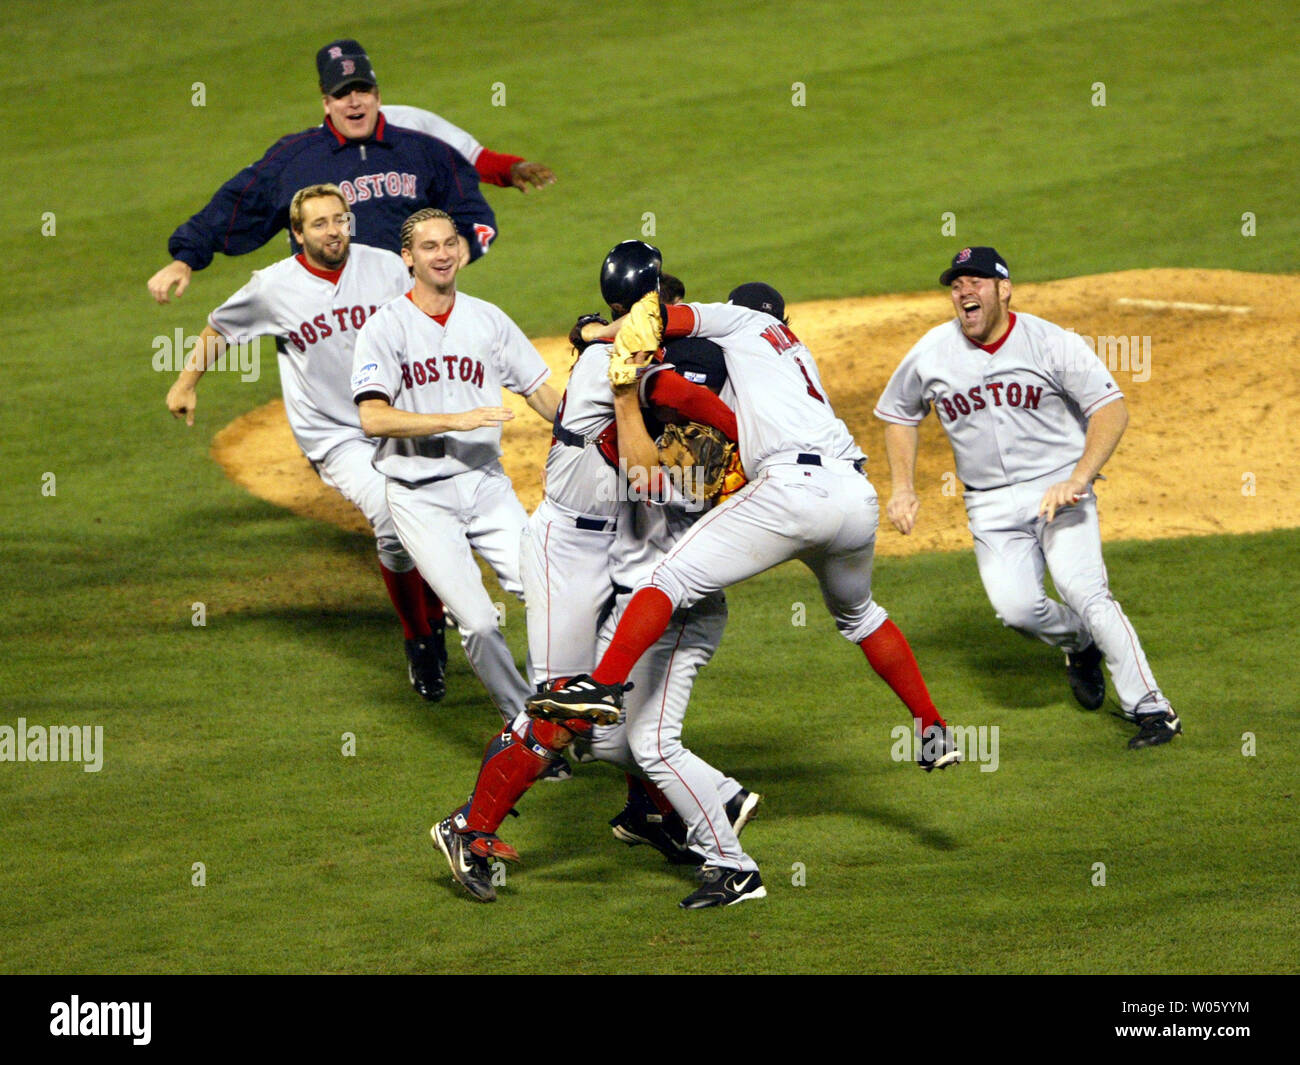 2004 Red Sox champions reunite at Fenway - The Boston Globe